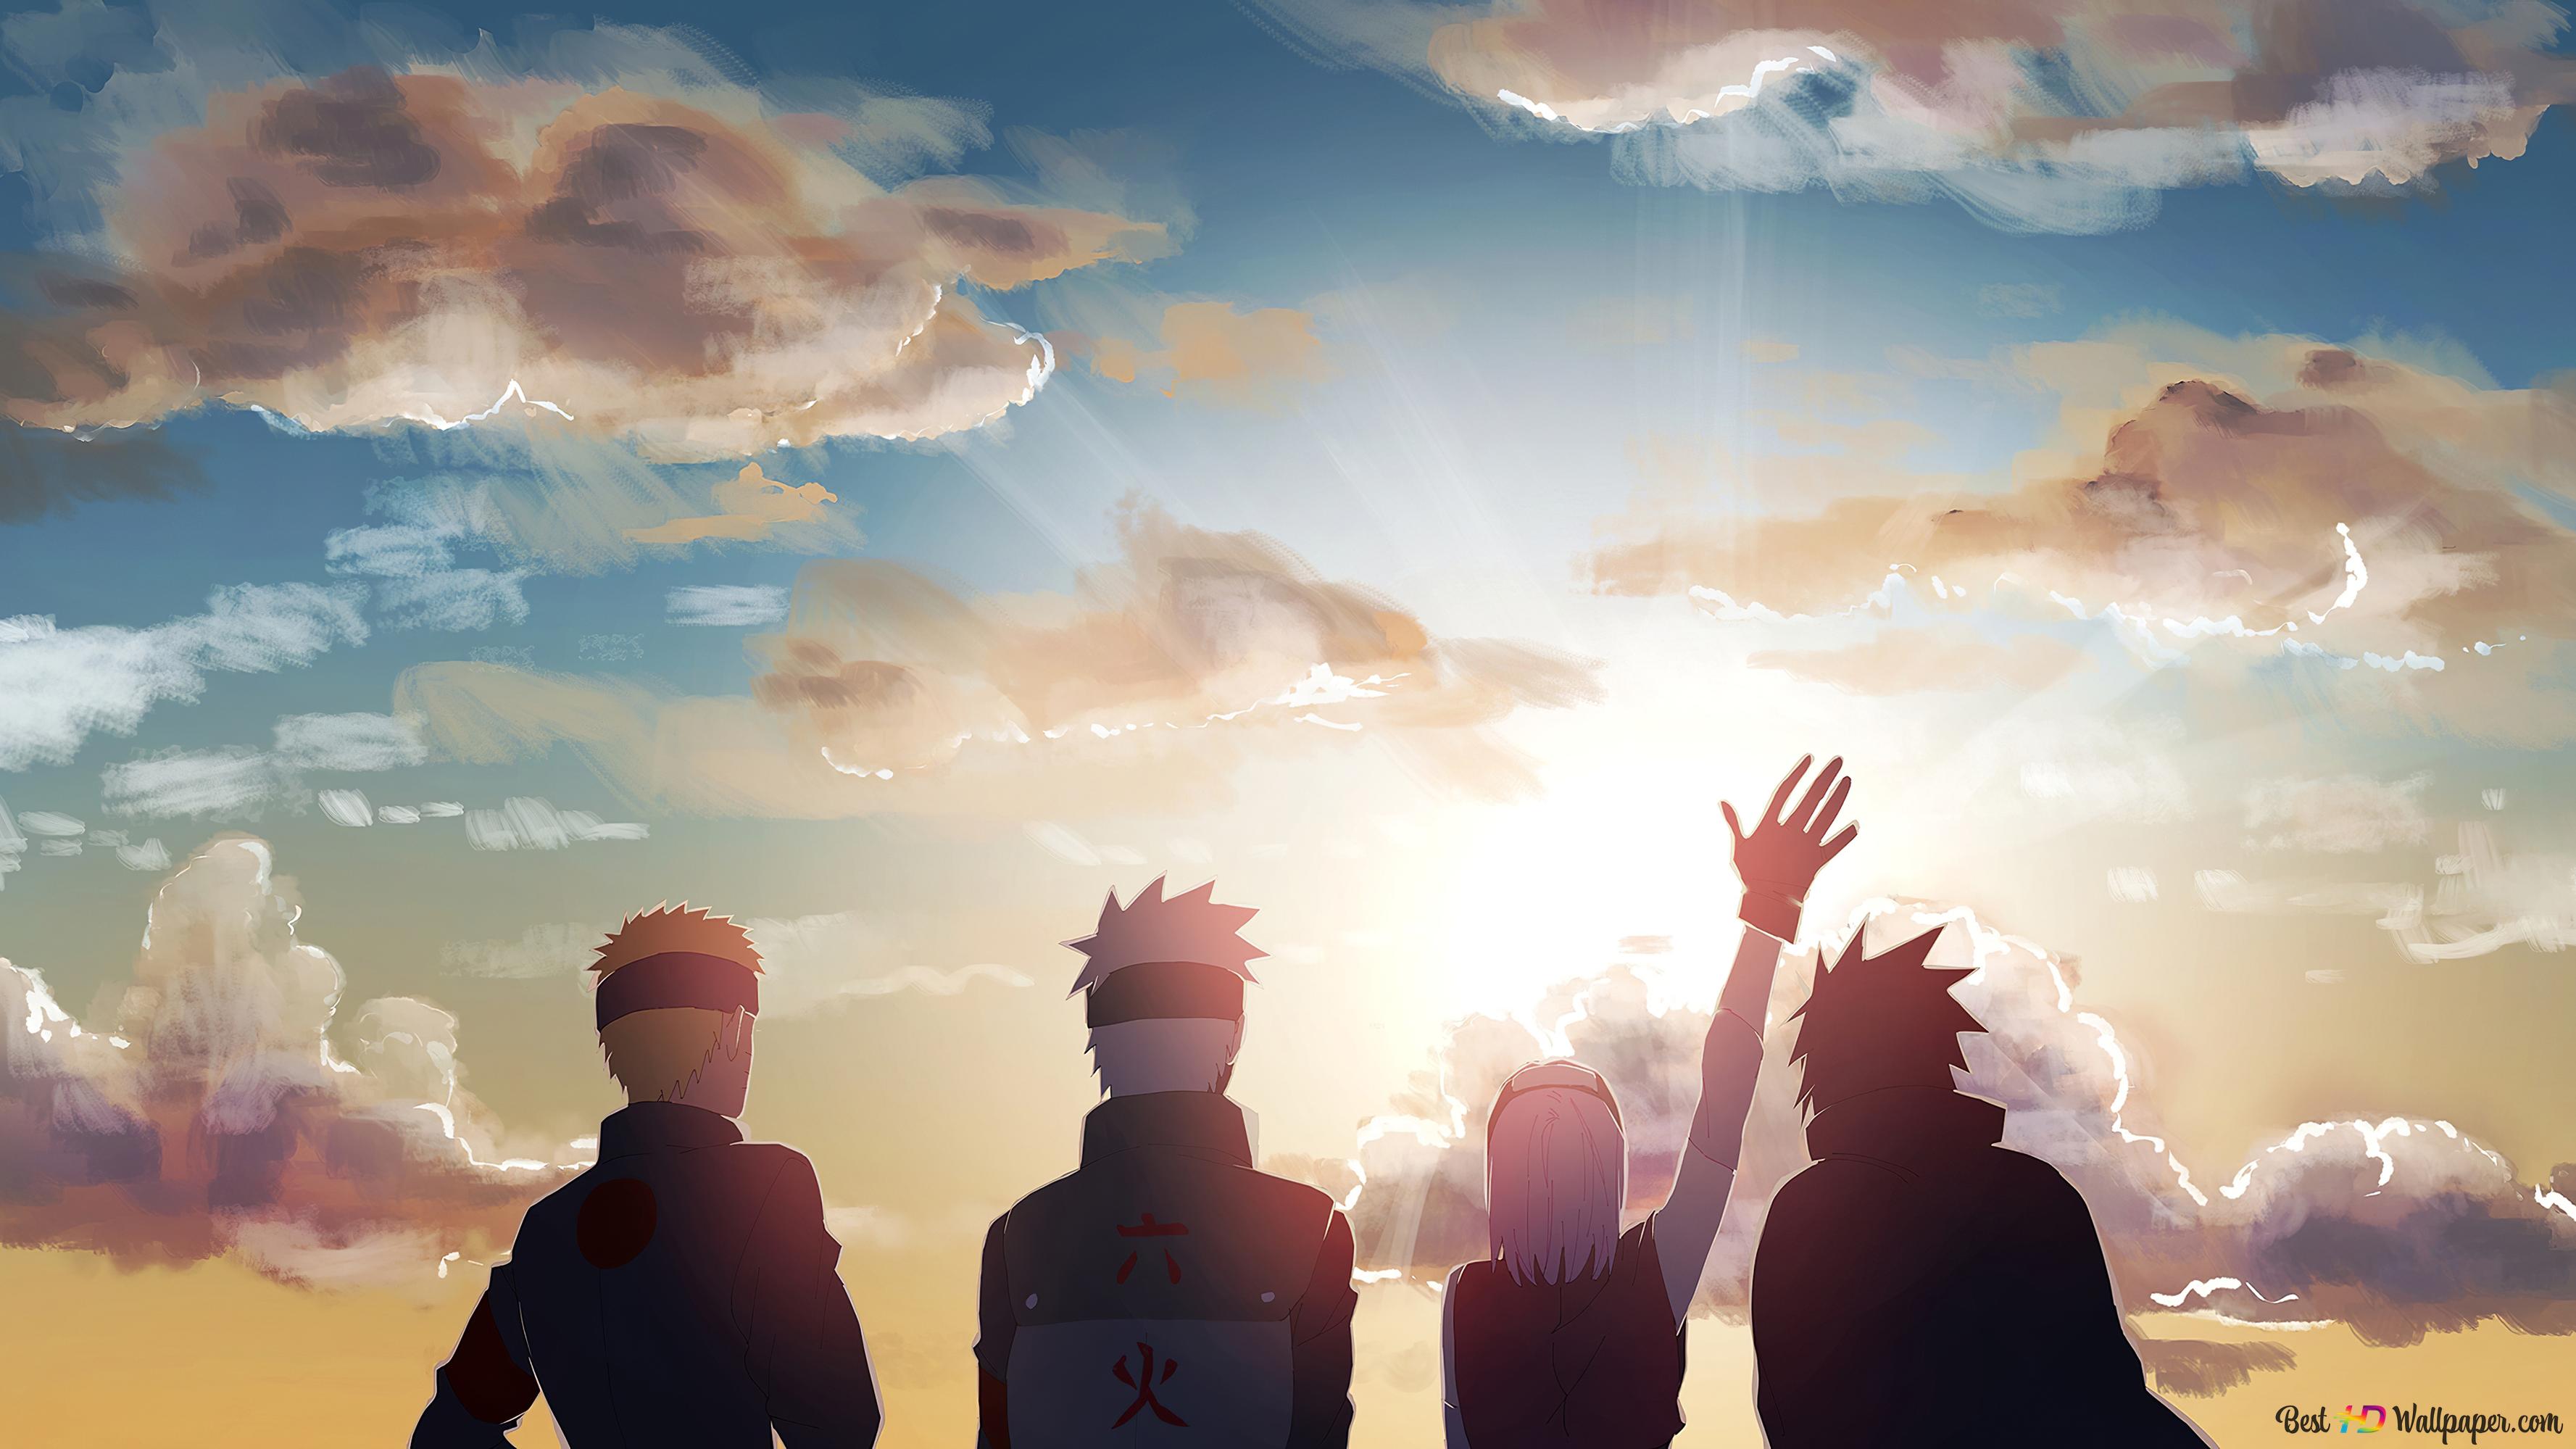 Naruto And His Companions Hello To The Rising Sun 4K wallpaper download